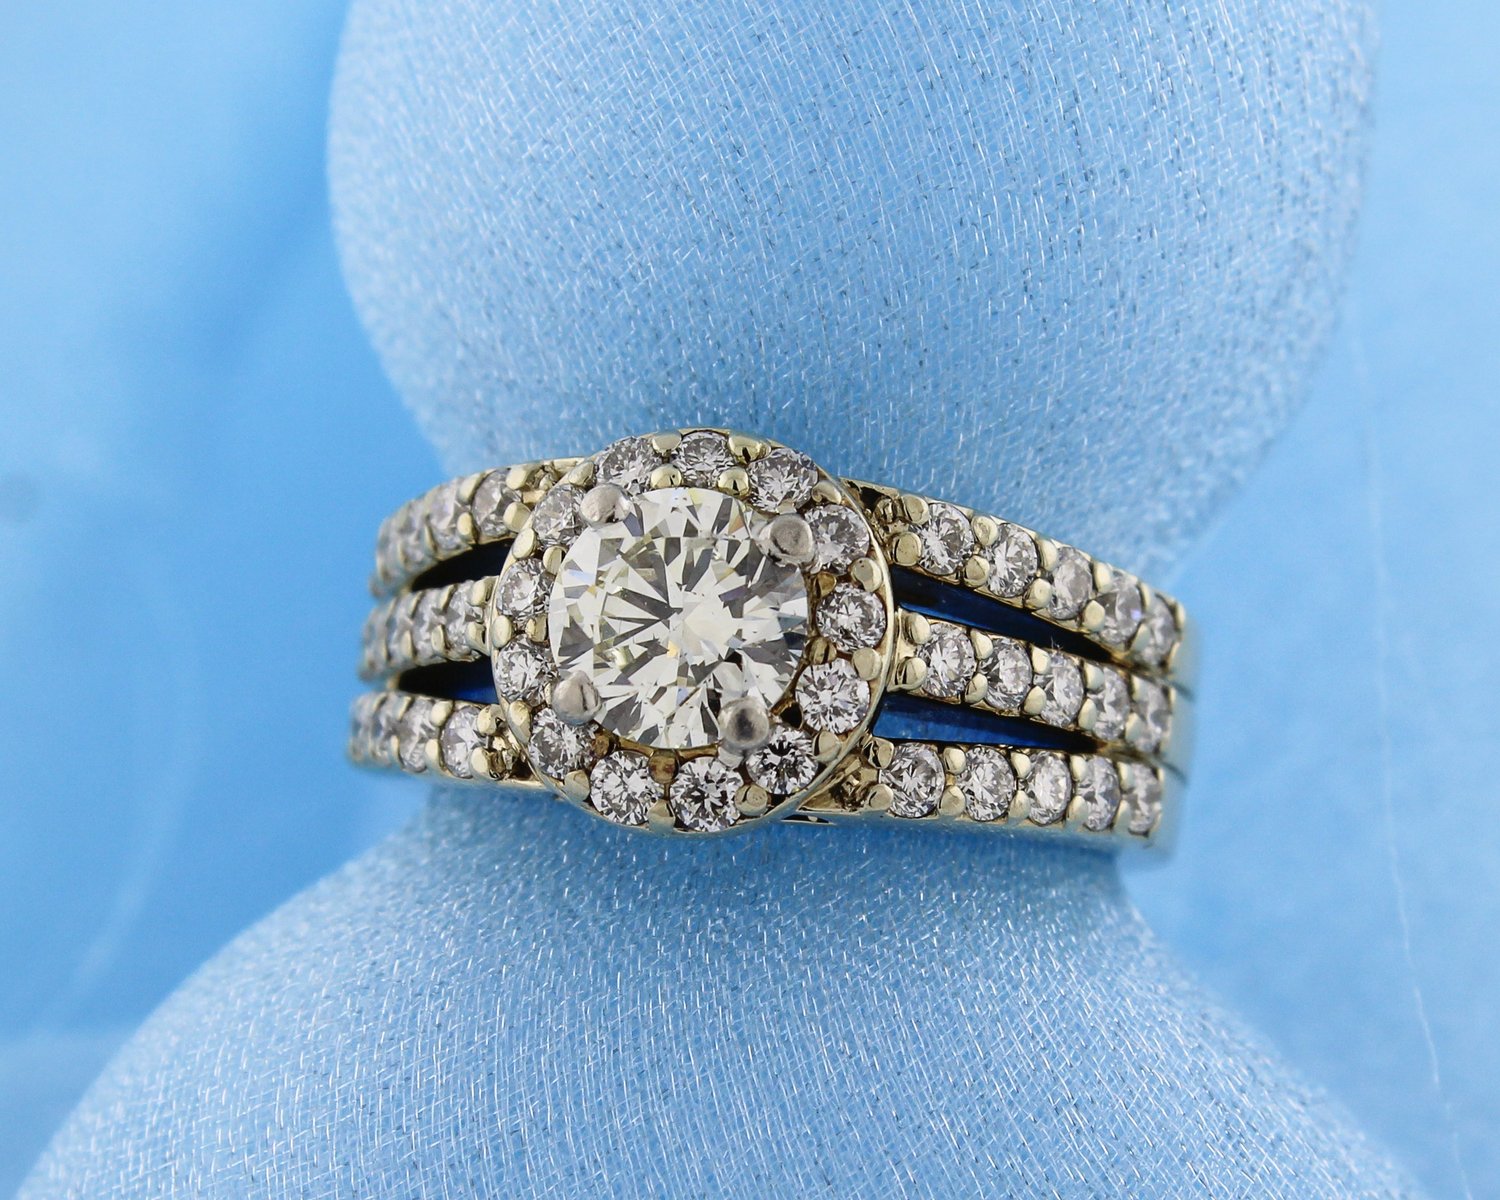 Center Diamond Ring - 14k White Gold - 1.00 carat - Shop